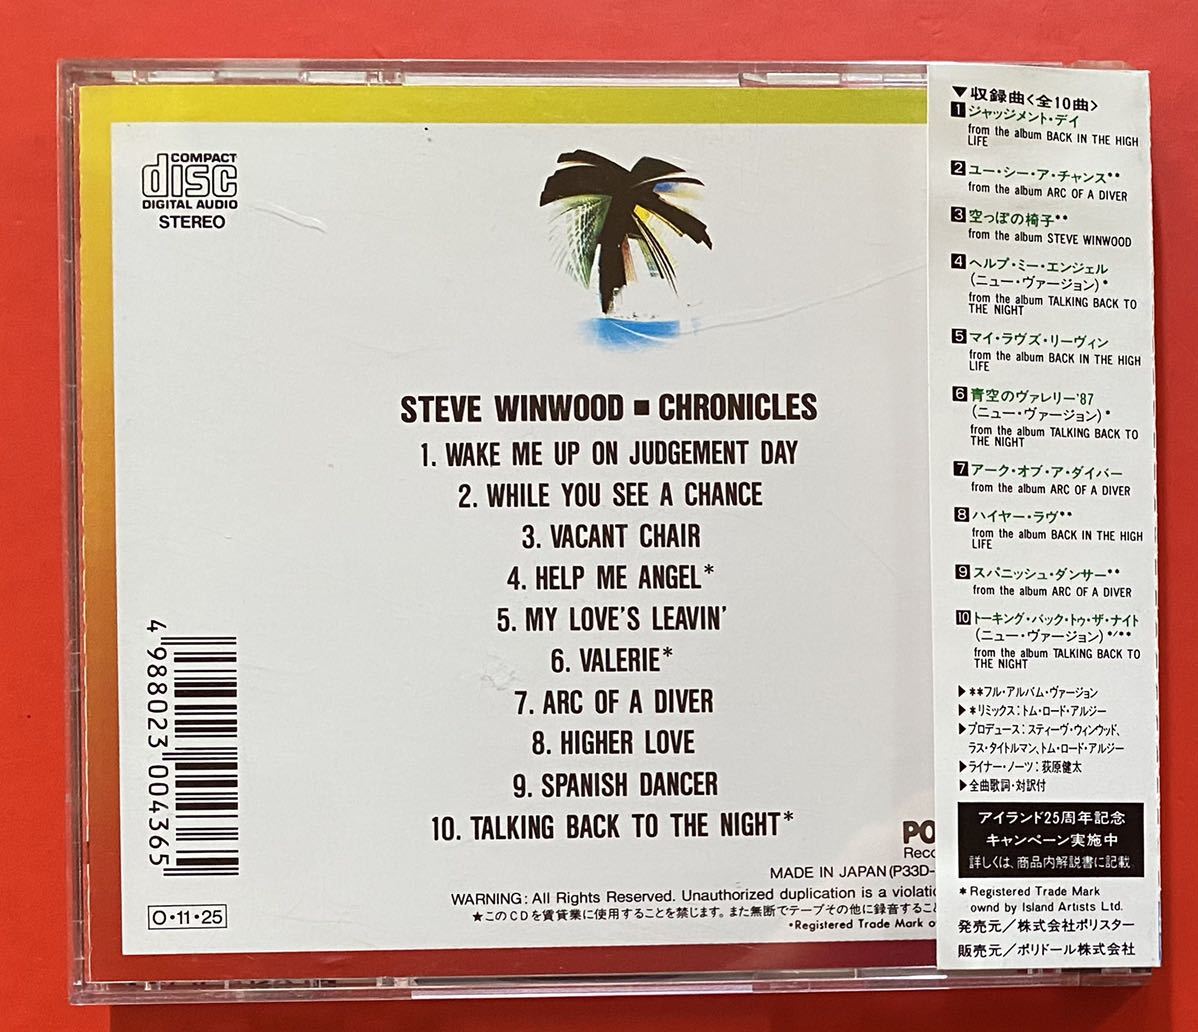 【CD】スティーヴ・ウィンウッド「CHRONICLES 」 STEVE WINWOOD 国内盤 [1107]_画像2